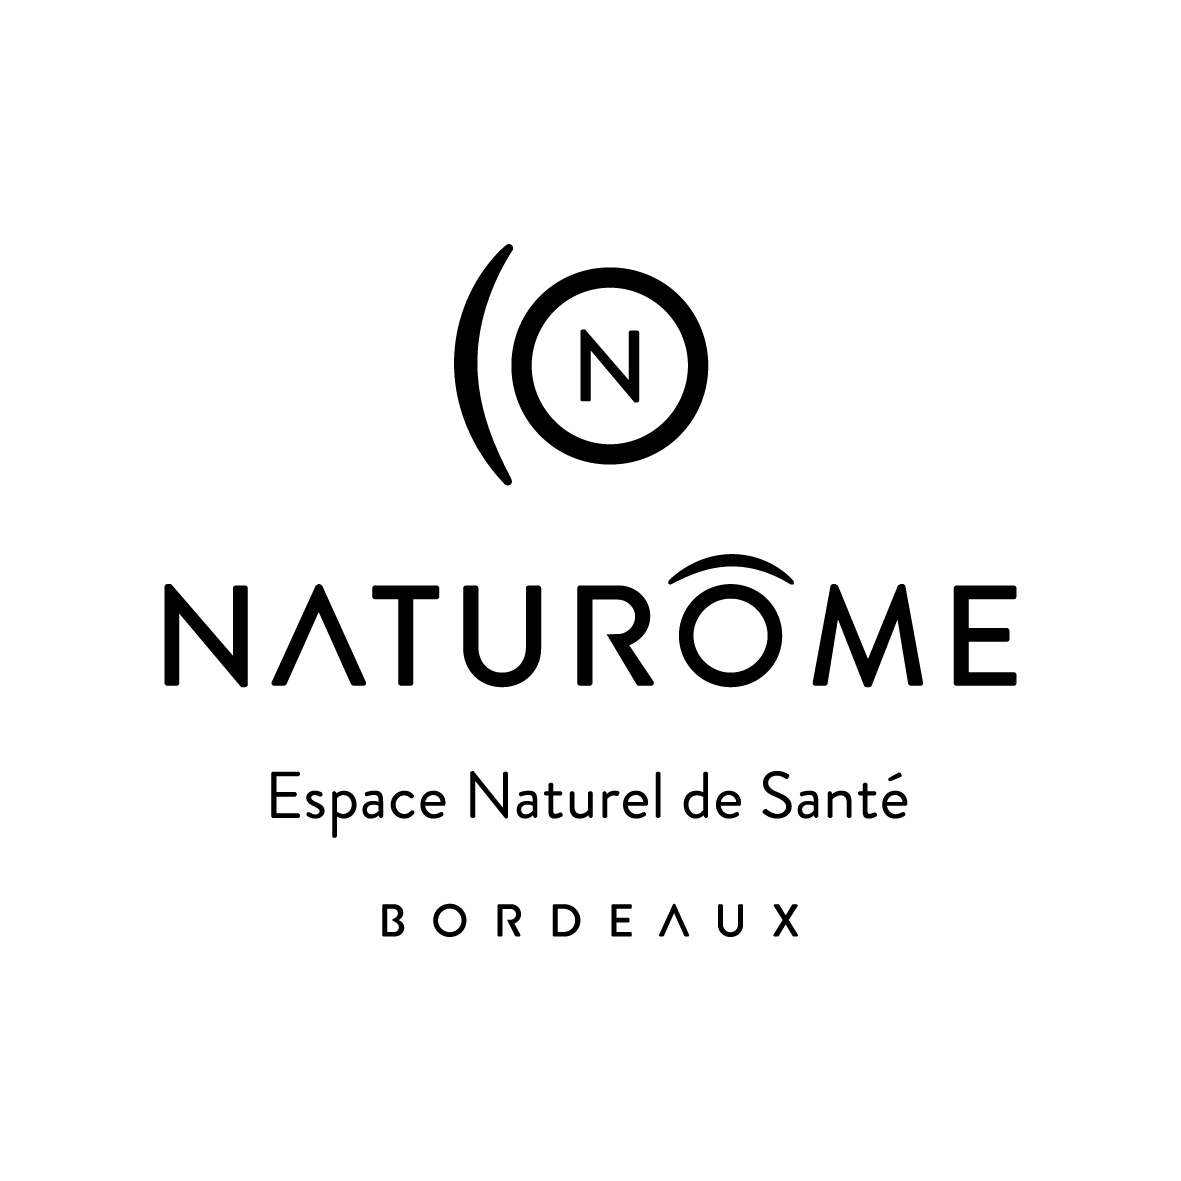 Elodie Brillaud: Naturopathe au 7 Impasse Saint-Jean, 33800 Bordeaux, France